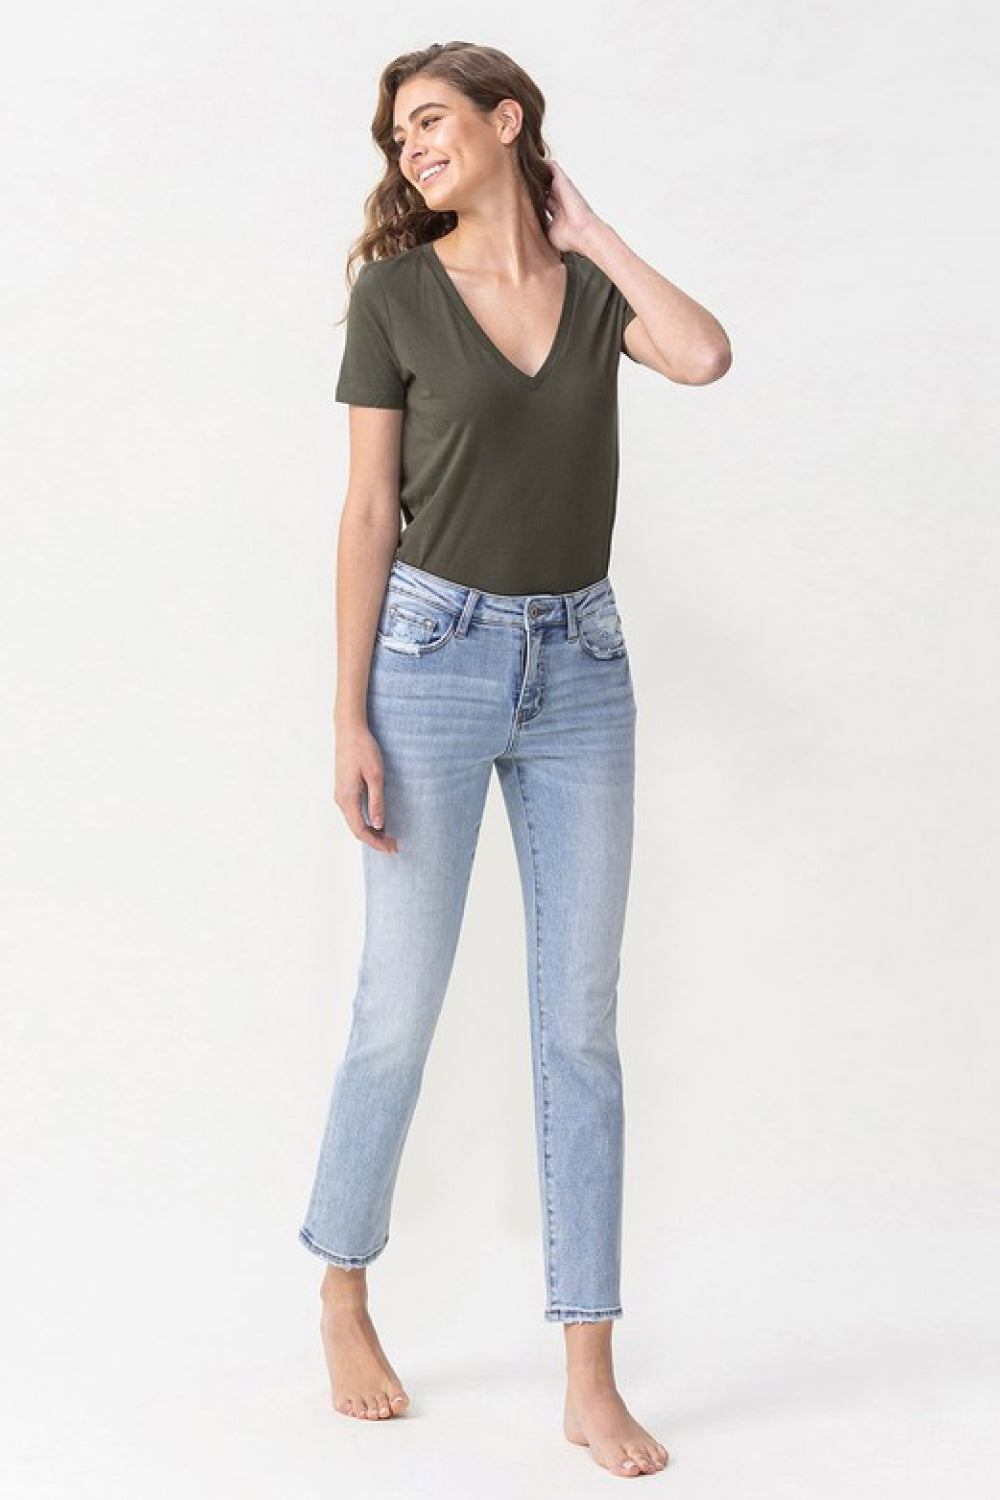 Lavender Lovervet Full Size Andrea Midrise Crop Straight Jeans Pants